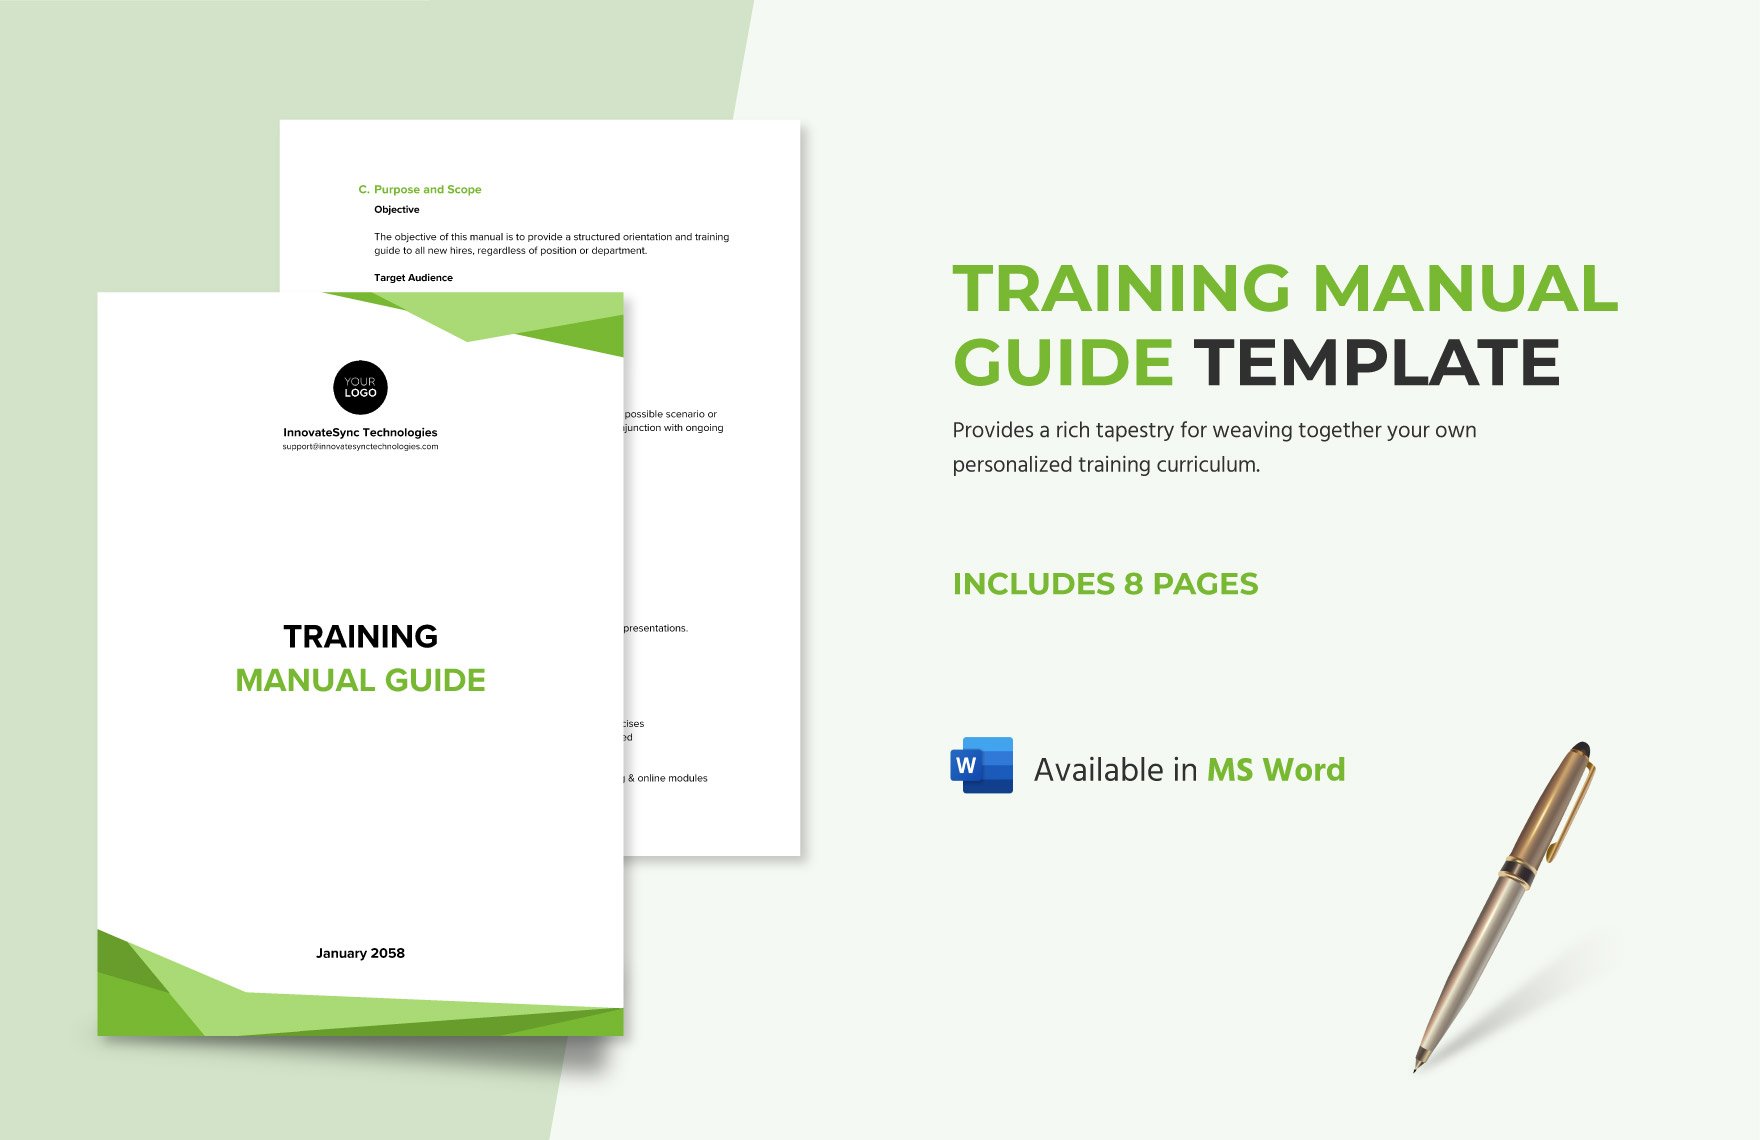 Training Manual Guide Template